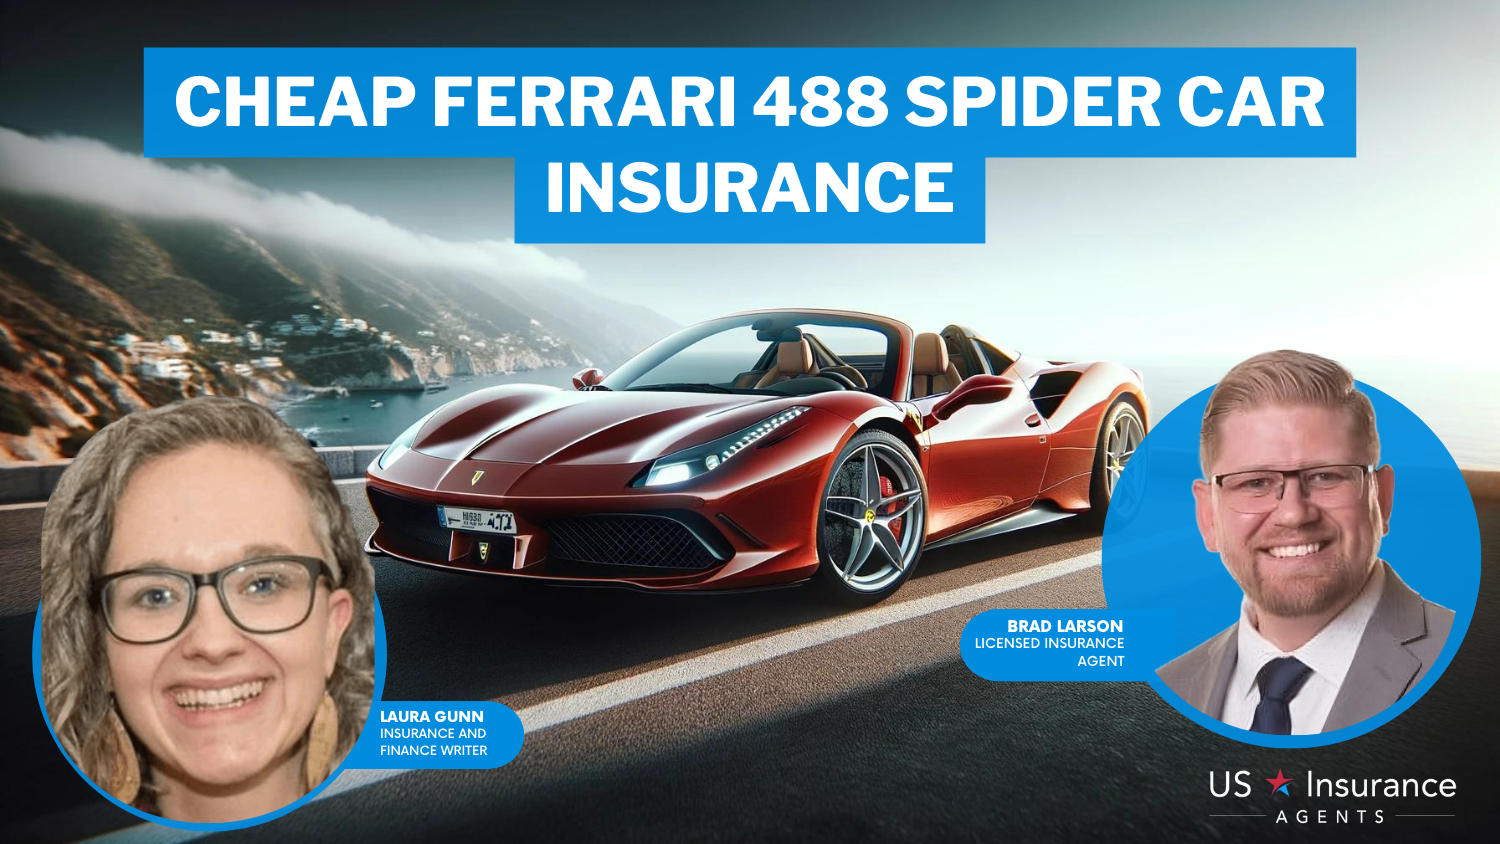 State Farm, Erie, Travelers: Cheap Ferrari 488 Spider Car Insurance